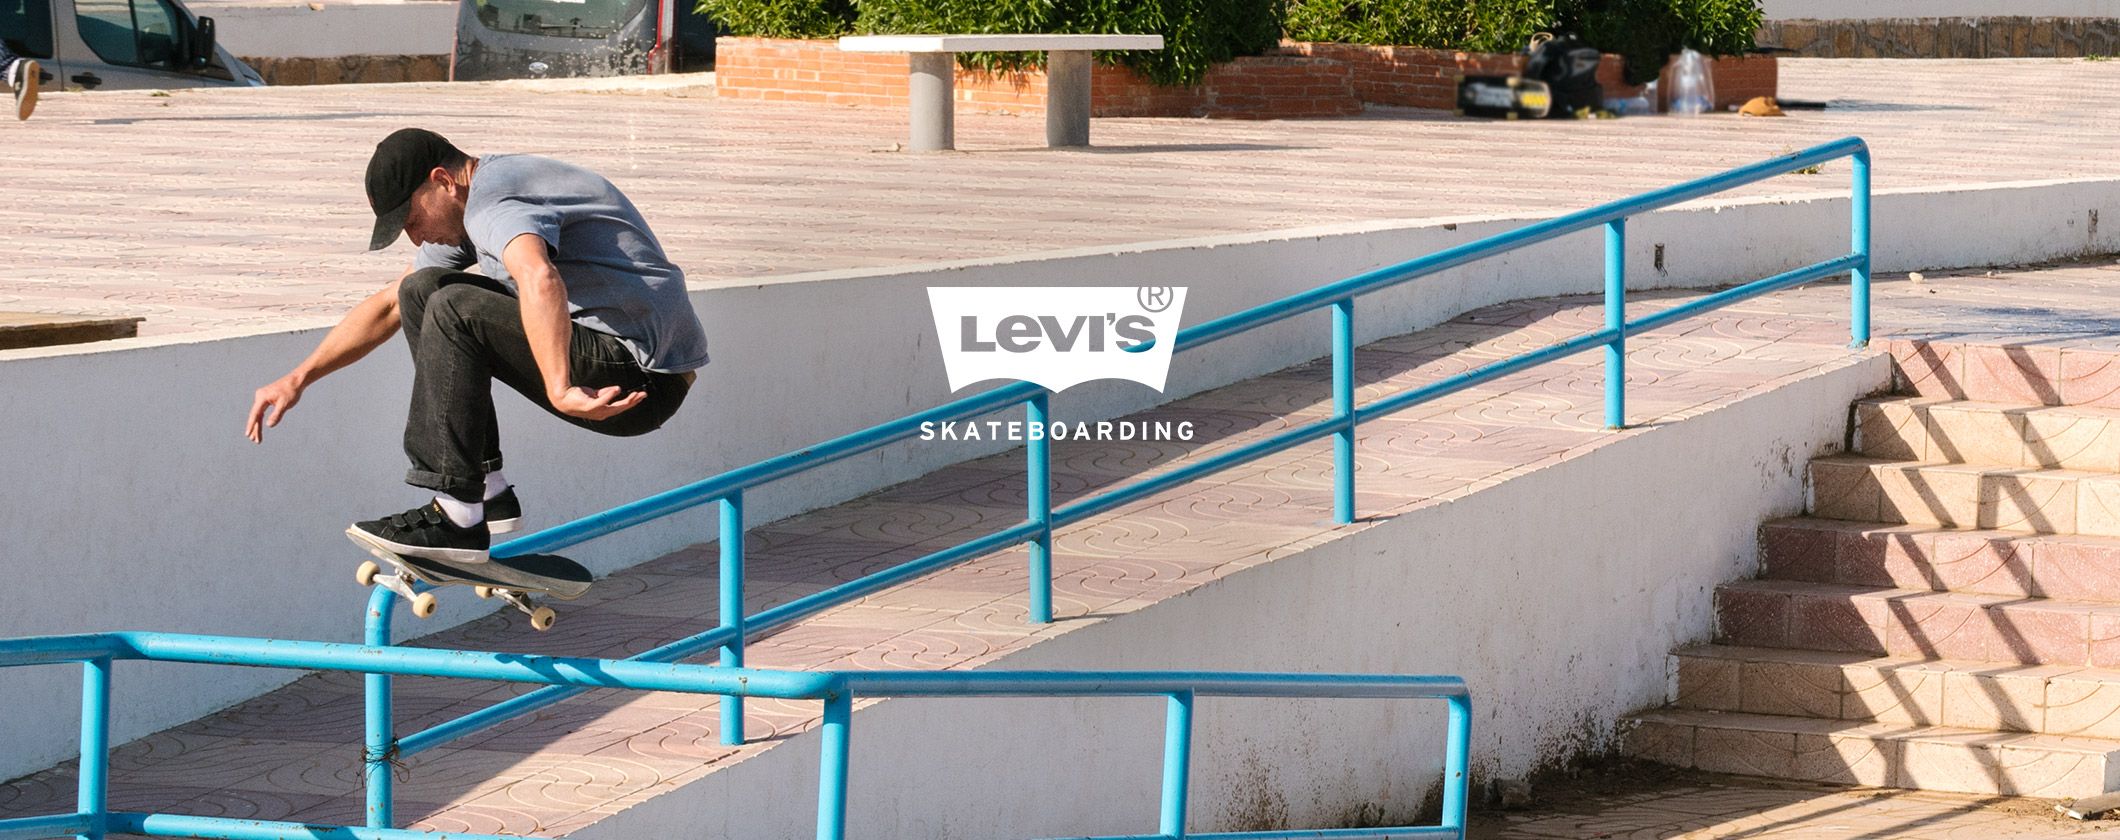 levi's 512 skateboarding